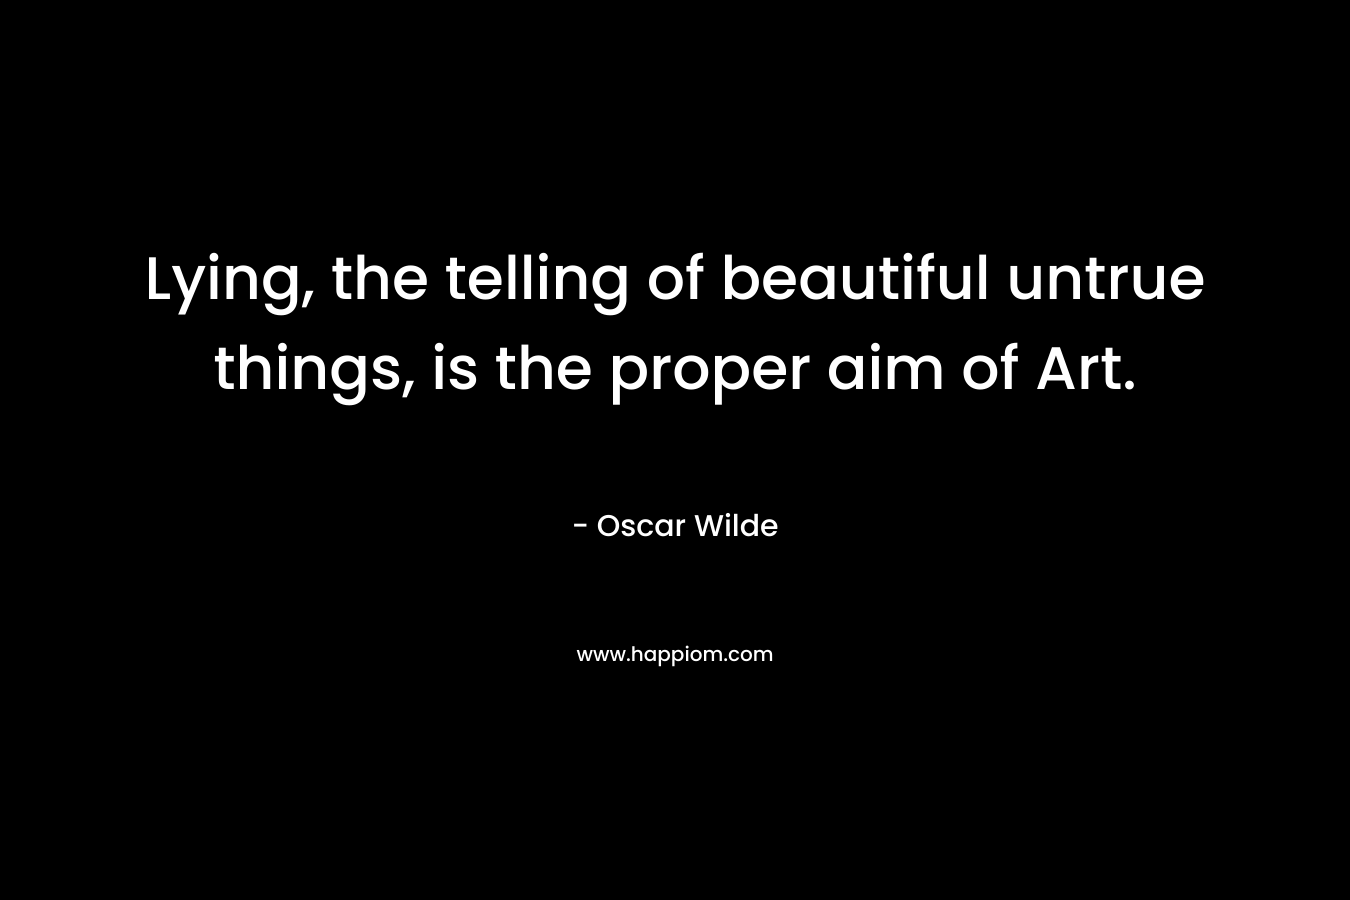 Lying, the telling of beautiful untrue things, is the proper aim of Art.